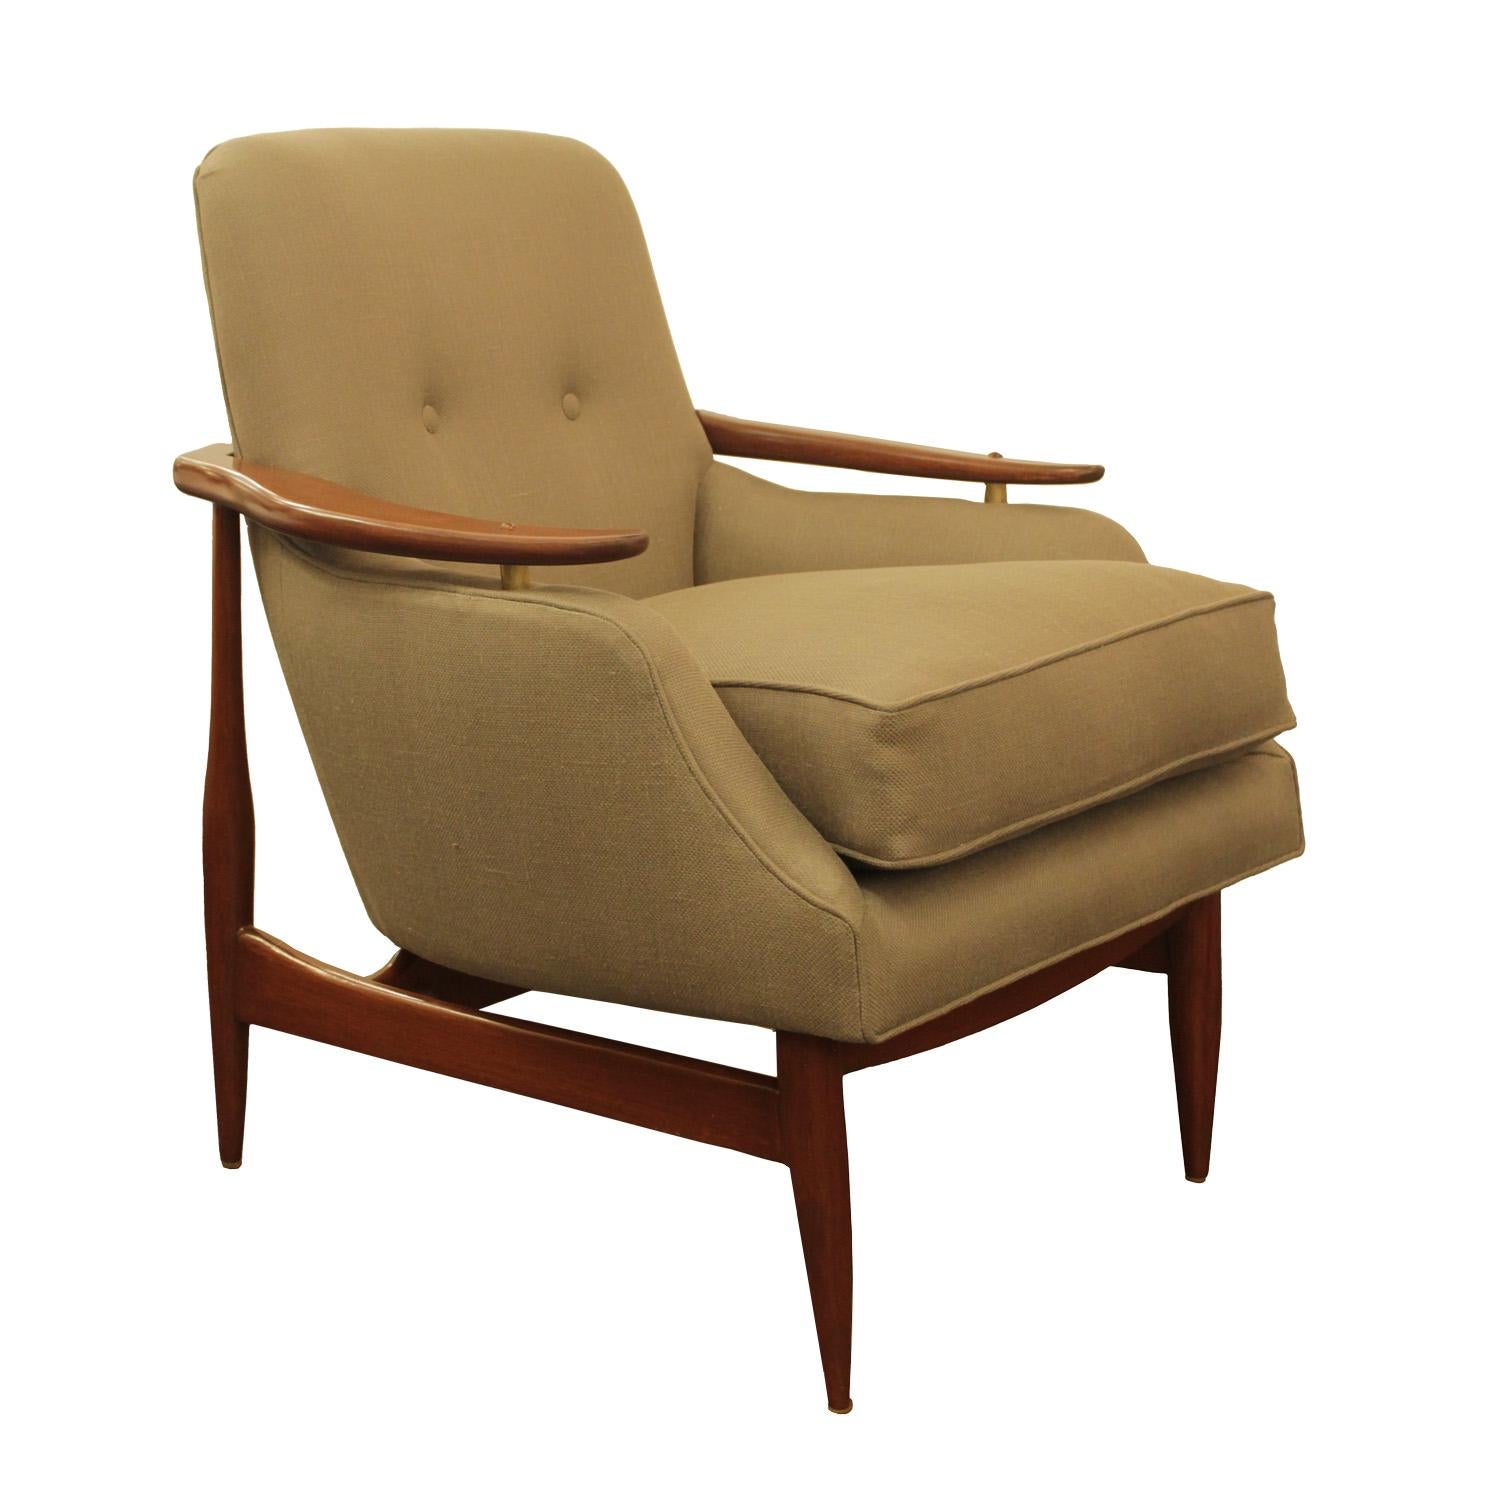 Scandinavian Modern Finn Juhl Inspired Pair of Danish Mid-Century Lounge Chairs 1970s